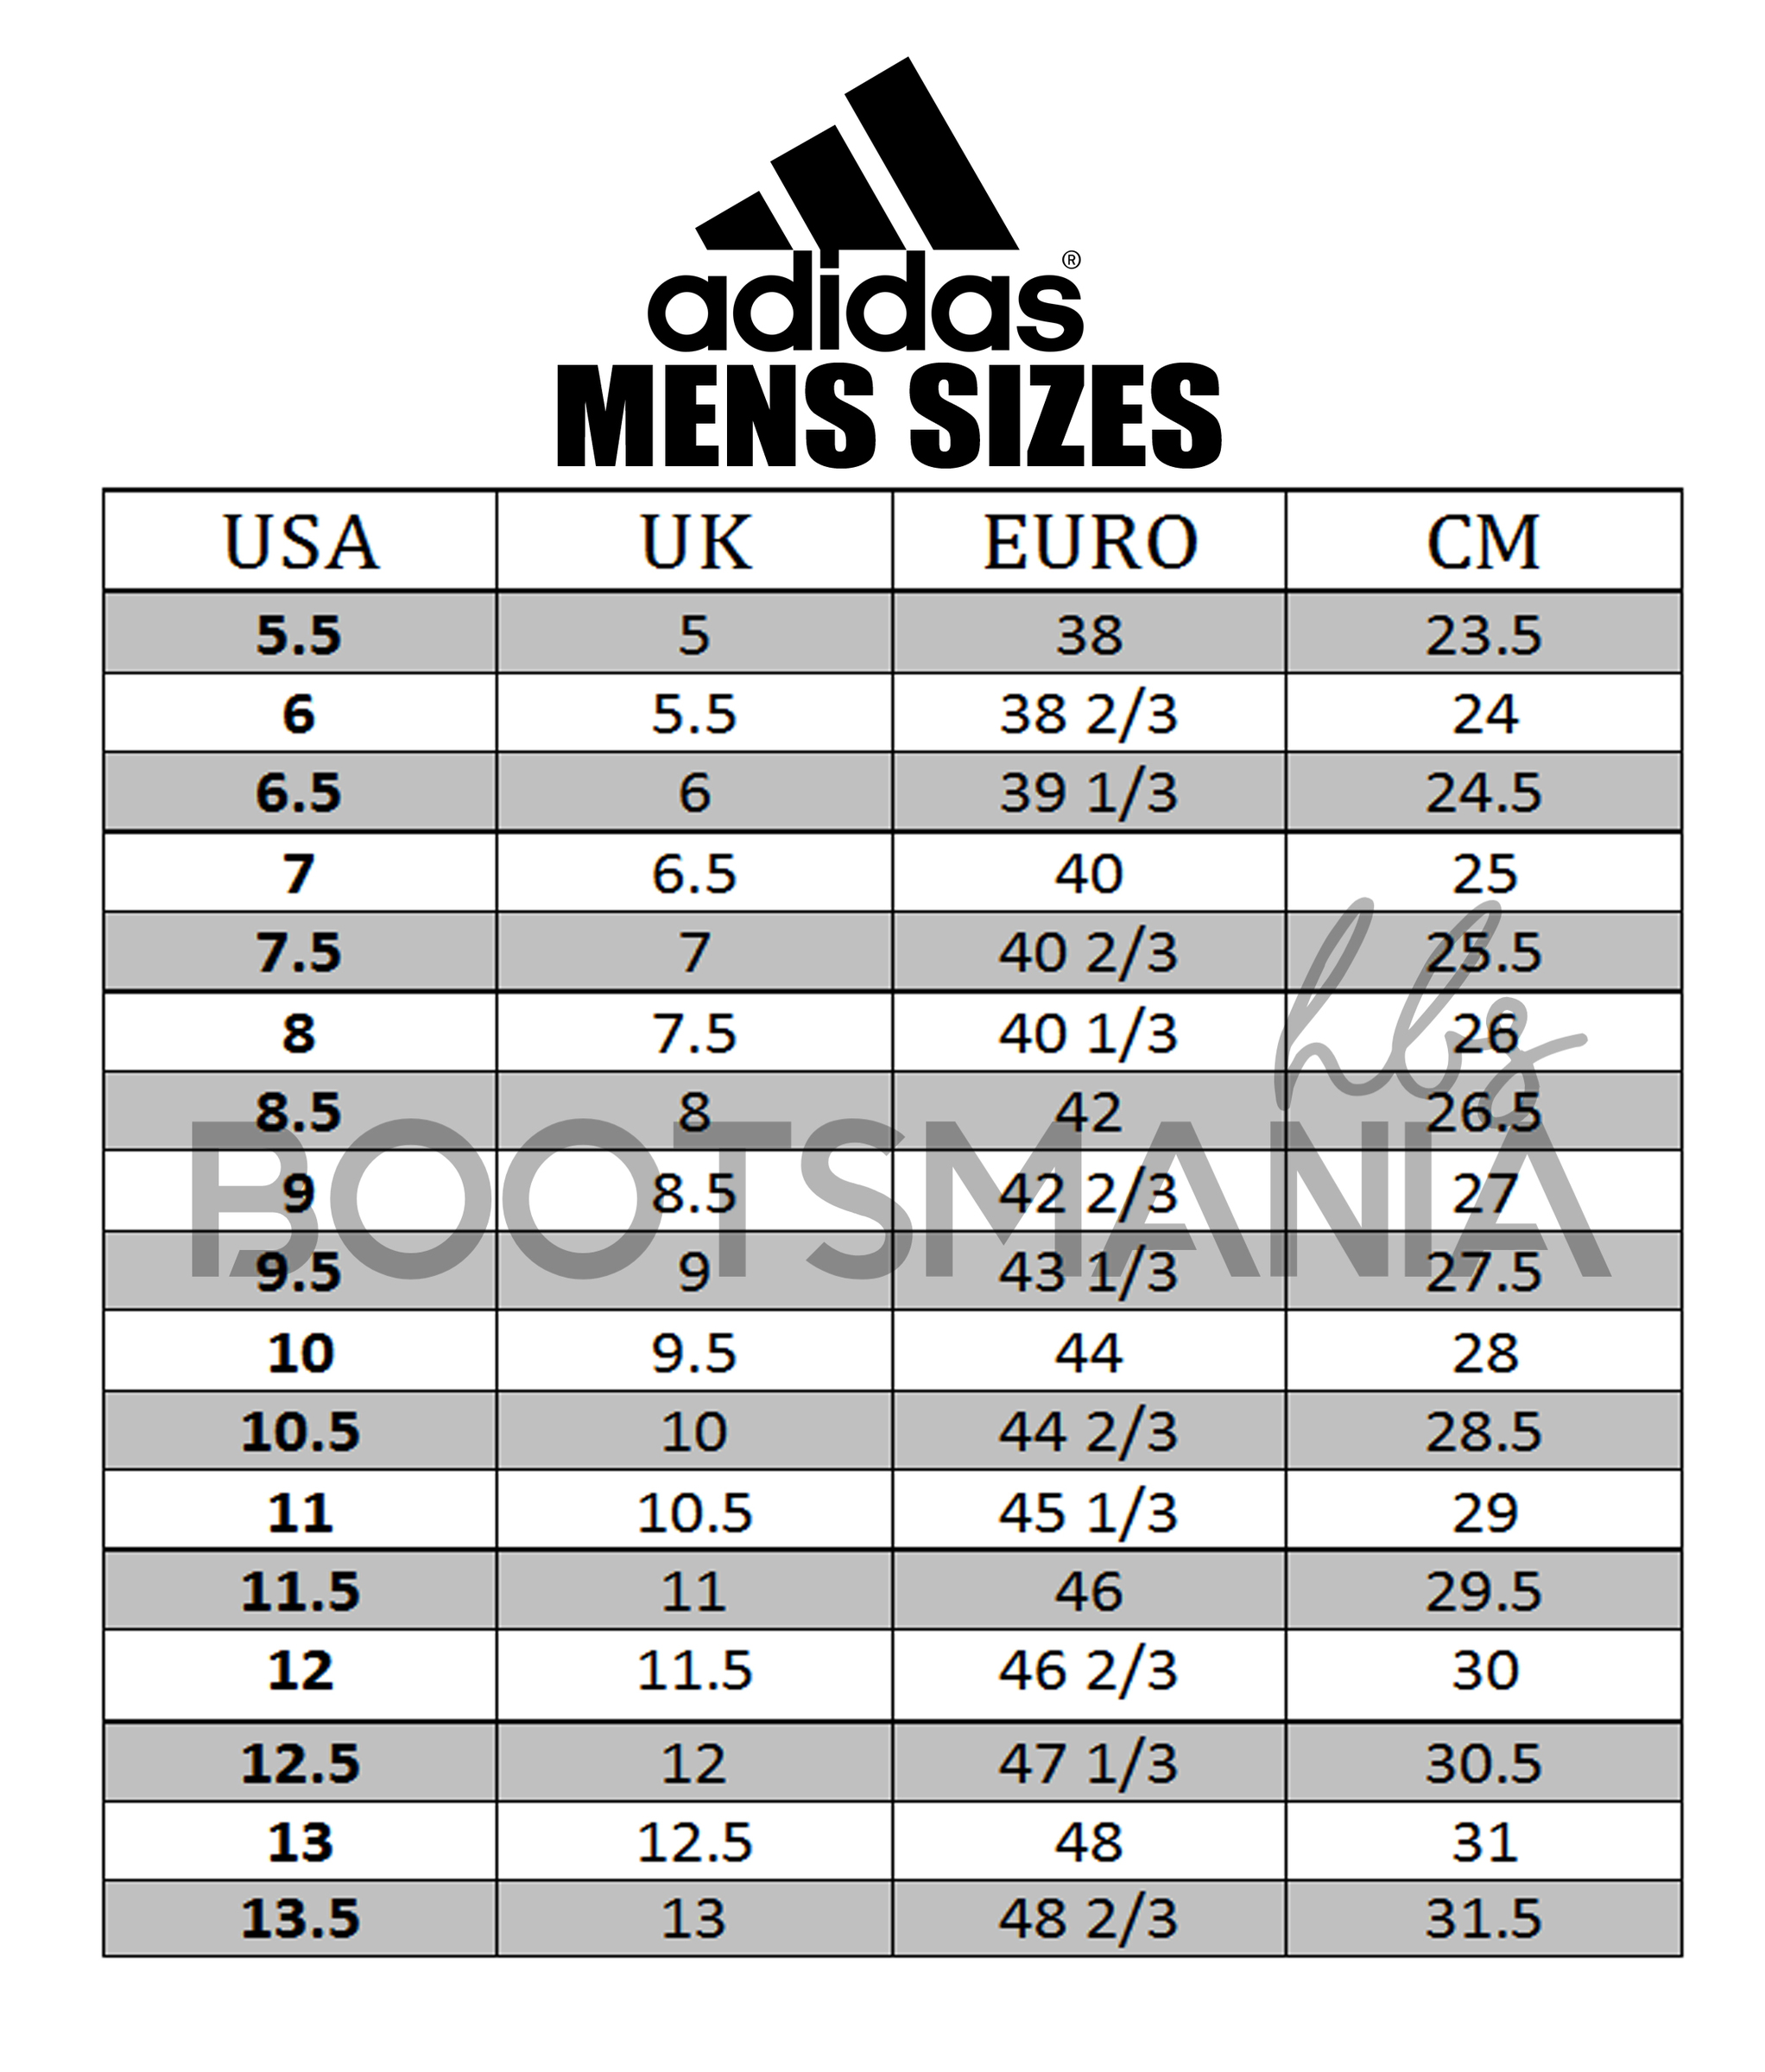 adidas football boots size chart, large deal off 59% - www.bortolato.com.br